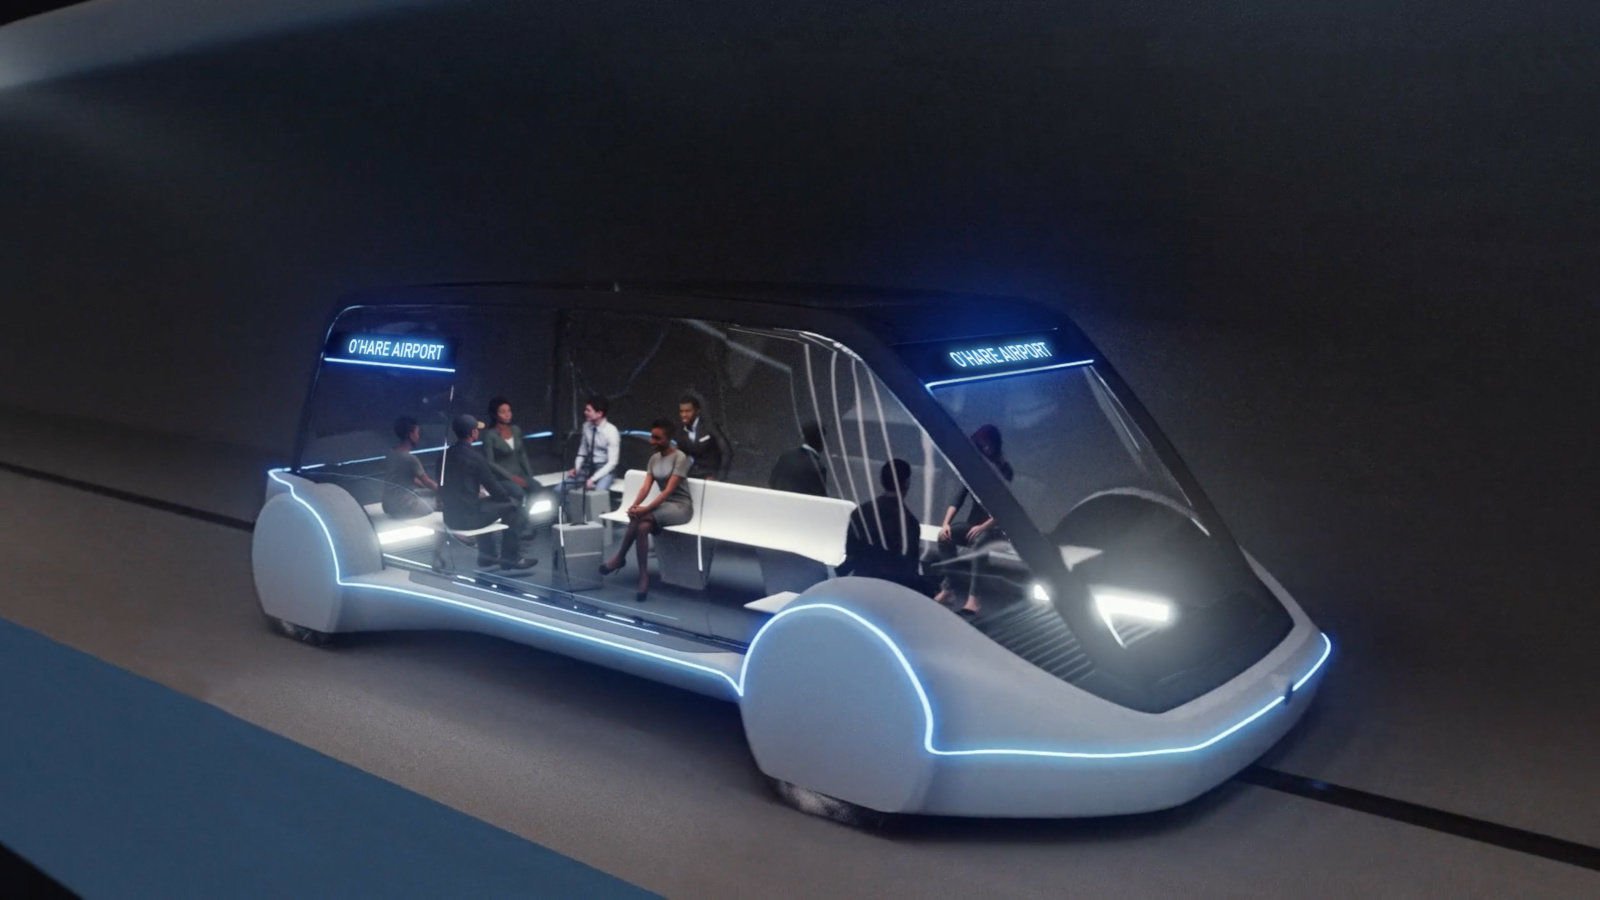 Boring Company will open a tunnel with Autonomous vehicles 18 Dec